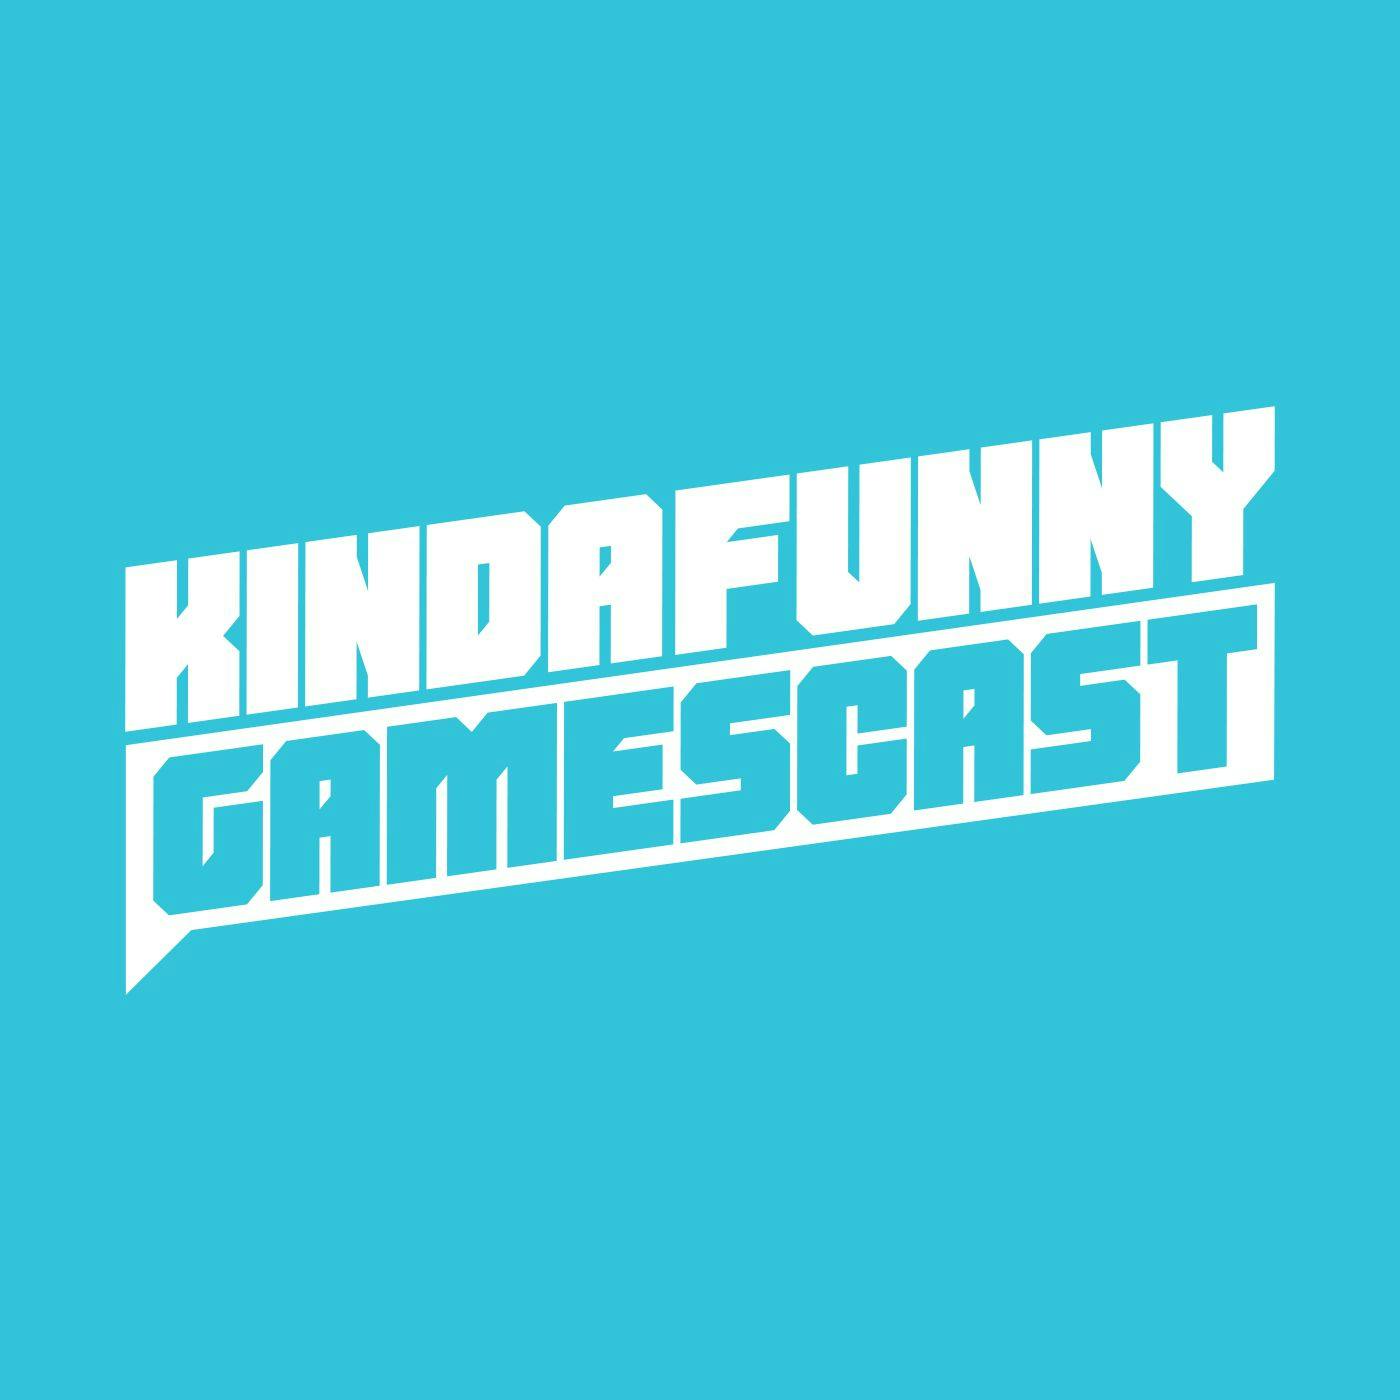 Nitpicking Next-Gen - Kinda Funny Gamescast Ep. 50